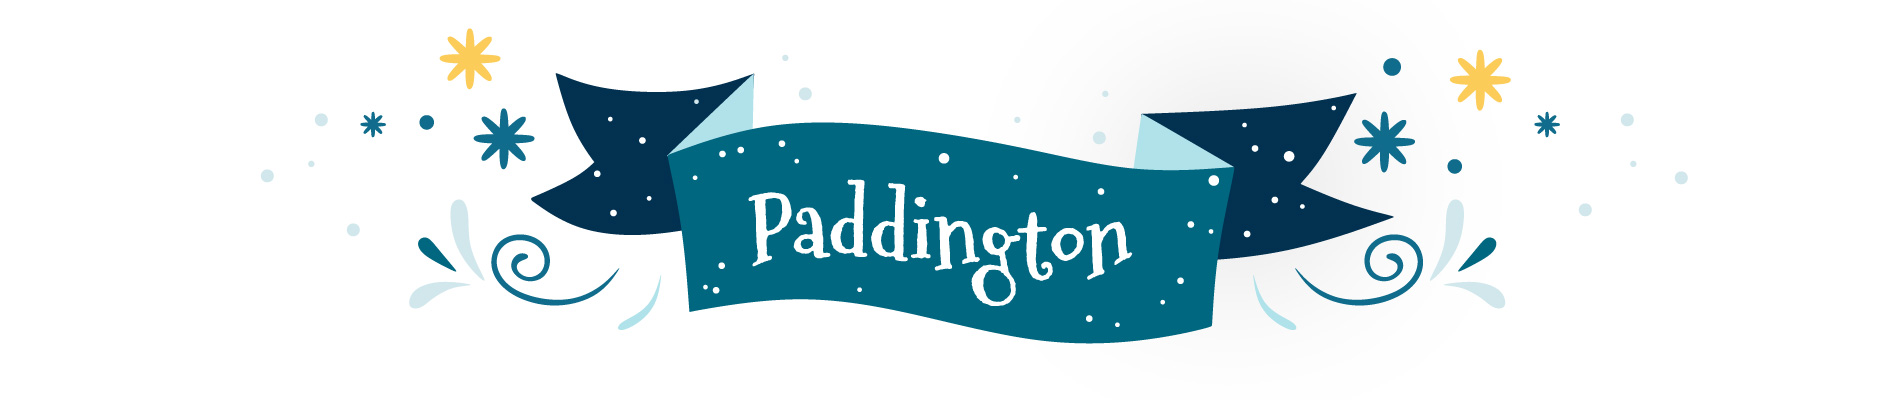 paddington gifts for adults